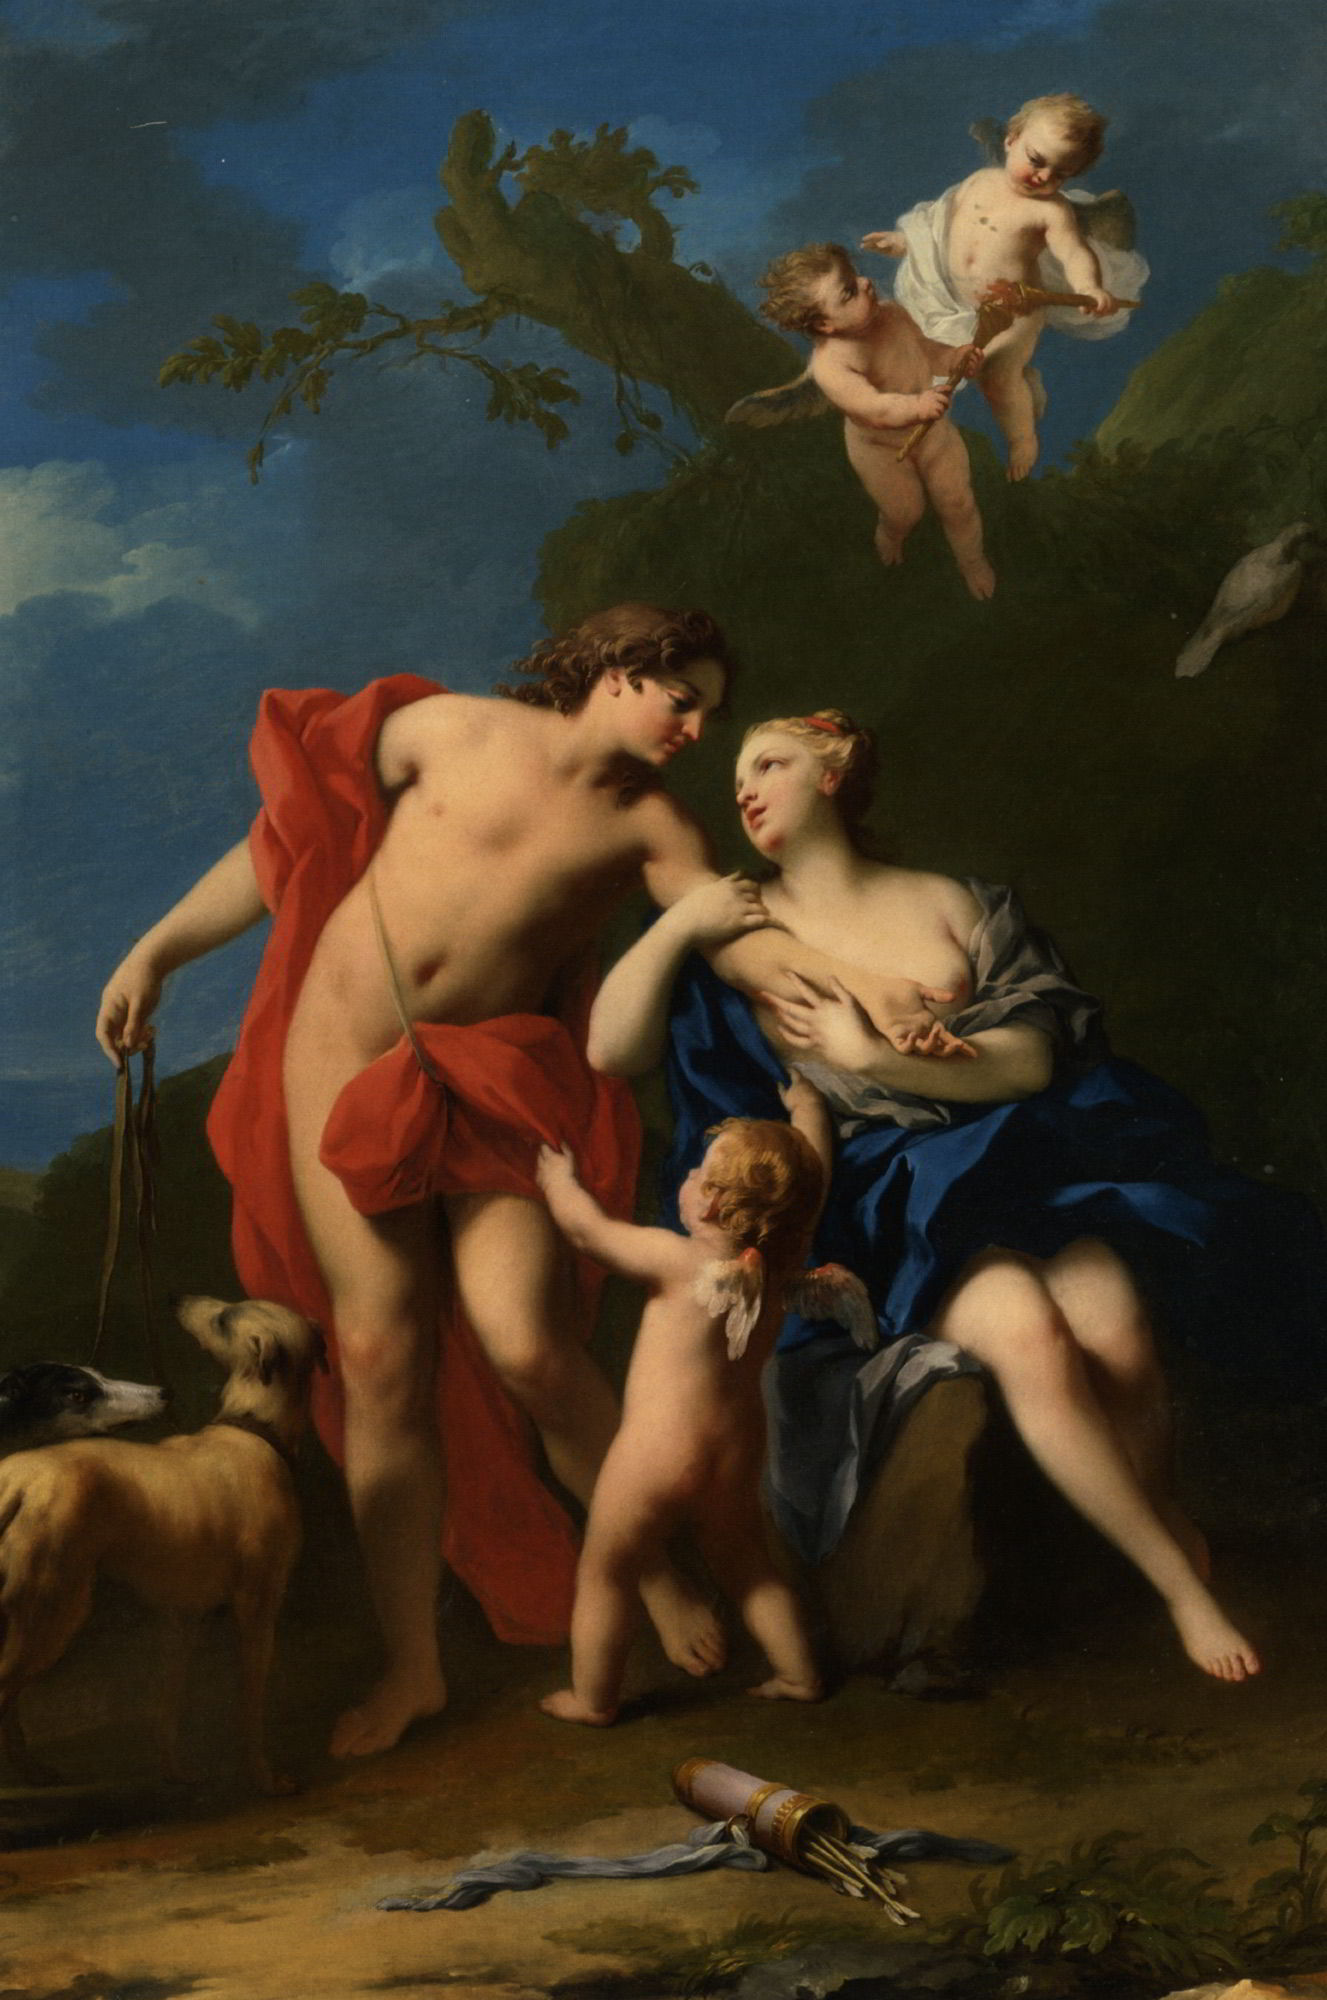 Venus and Adonis by Jacopo Amigoni